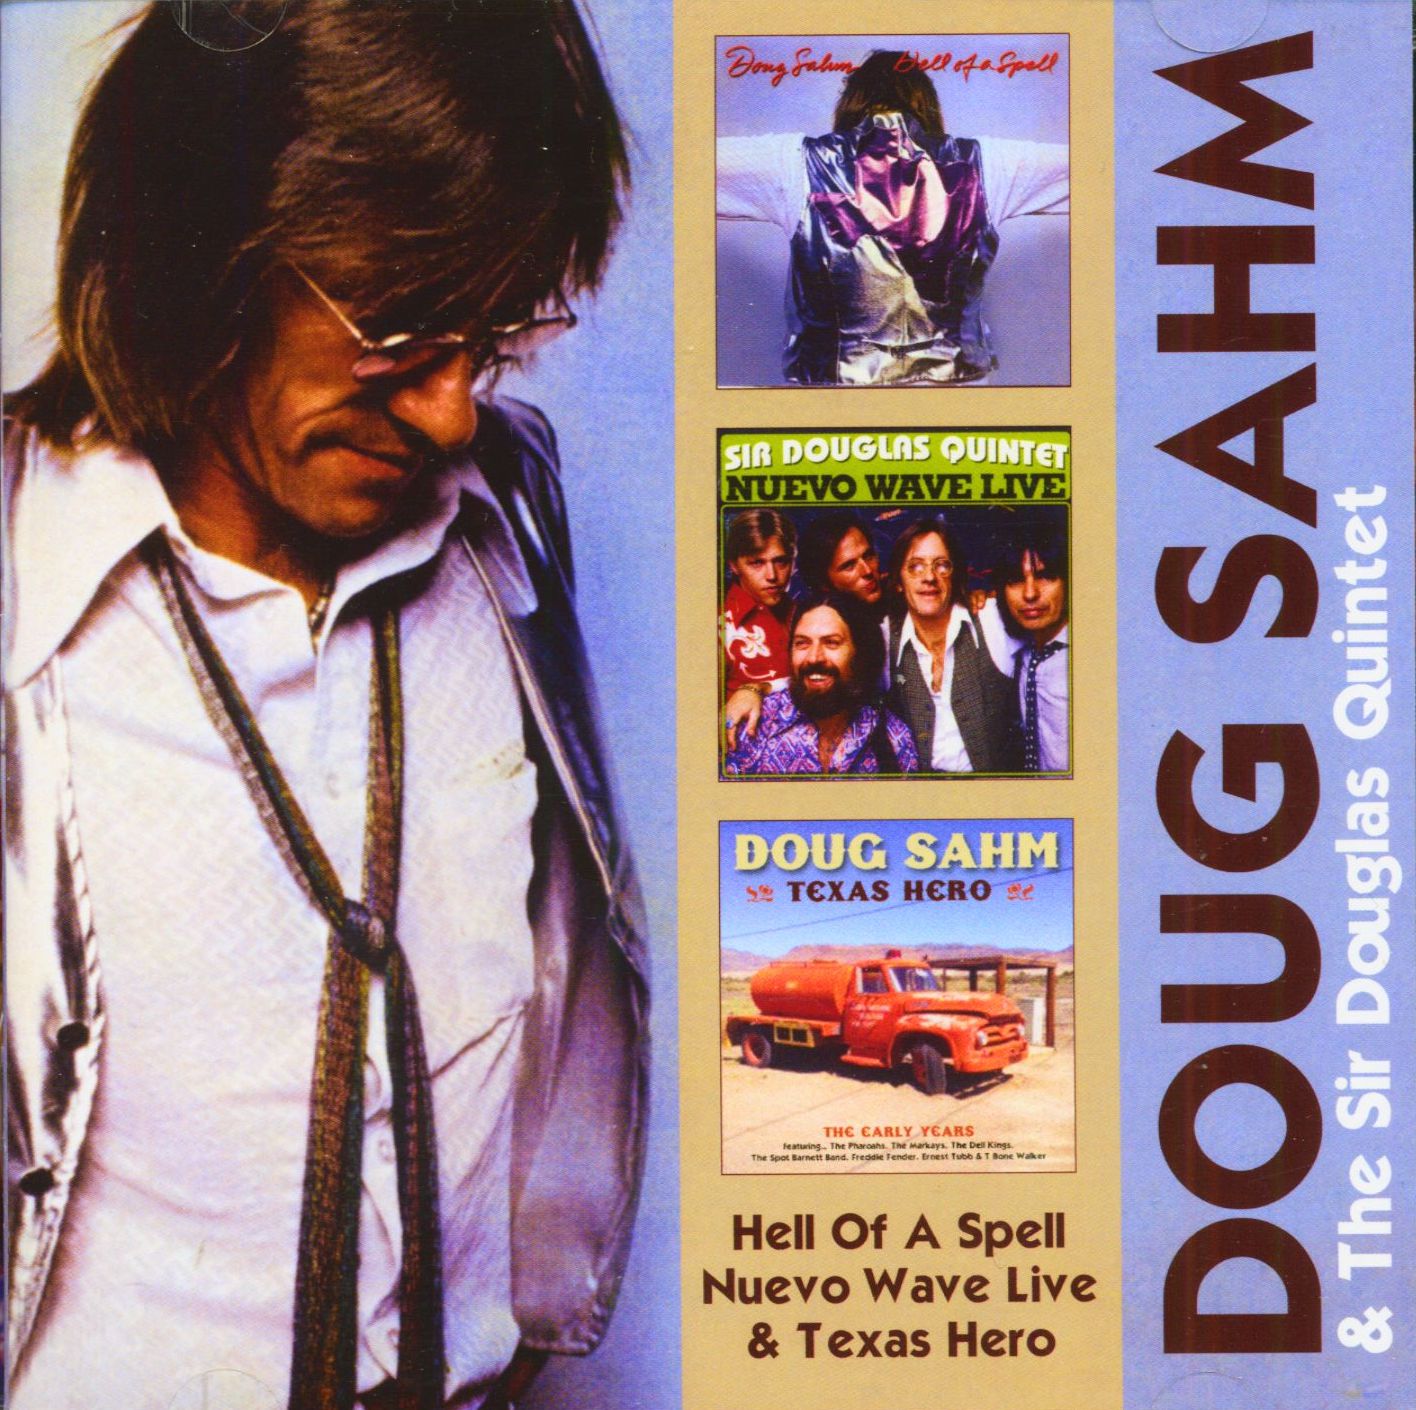 Doug Sahm - Hell Of A Spell/ Nuevo Wave Live/ Texas Hero - 2CD